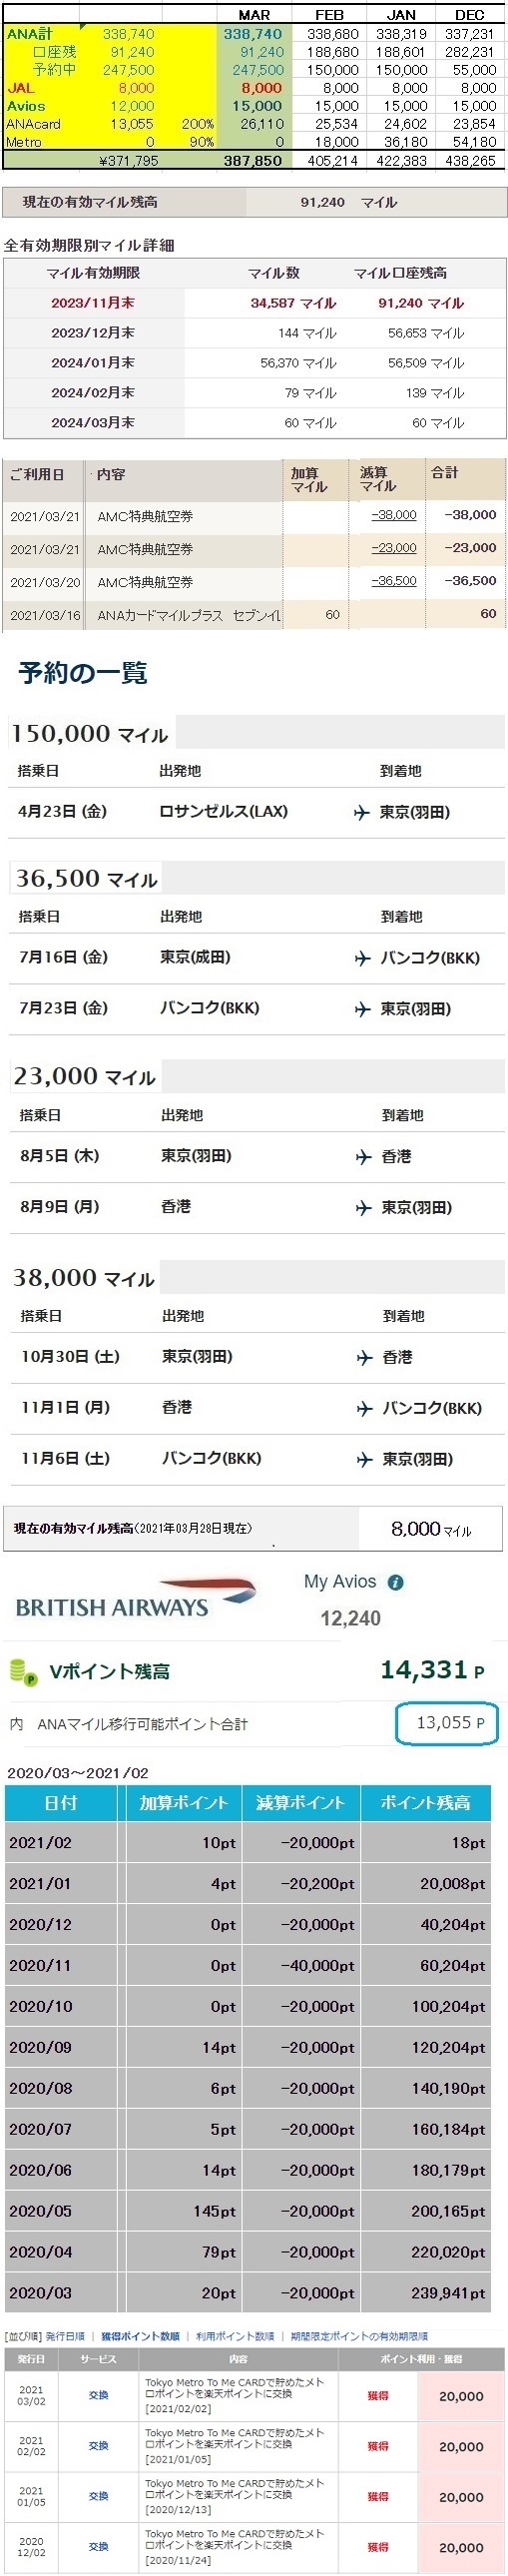 【ANAマイル】 累計獲得926,240M→587,500M搭乗